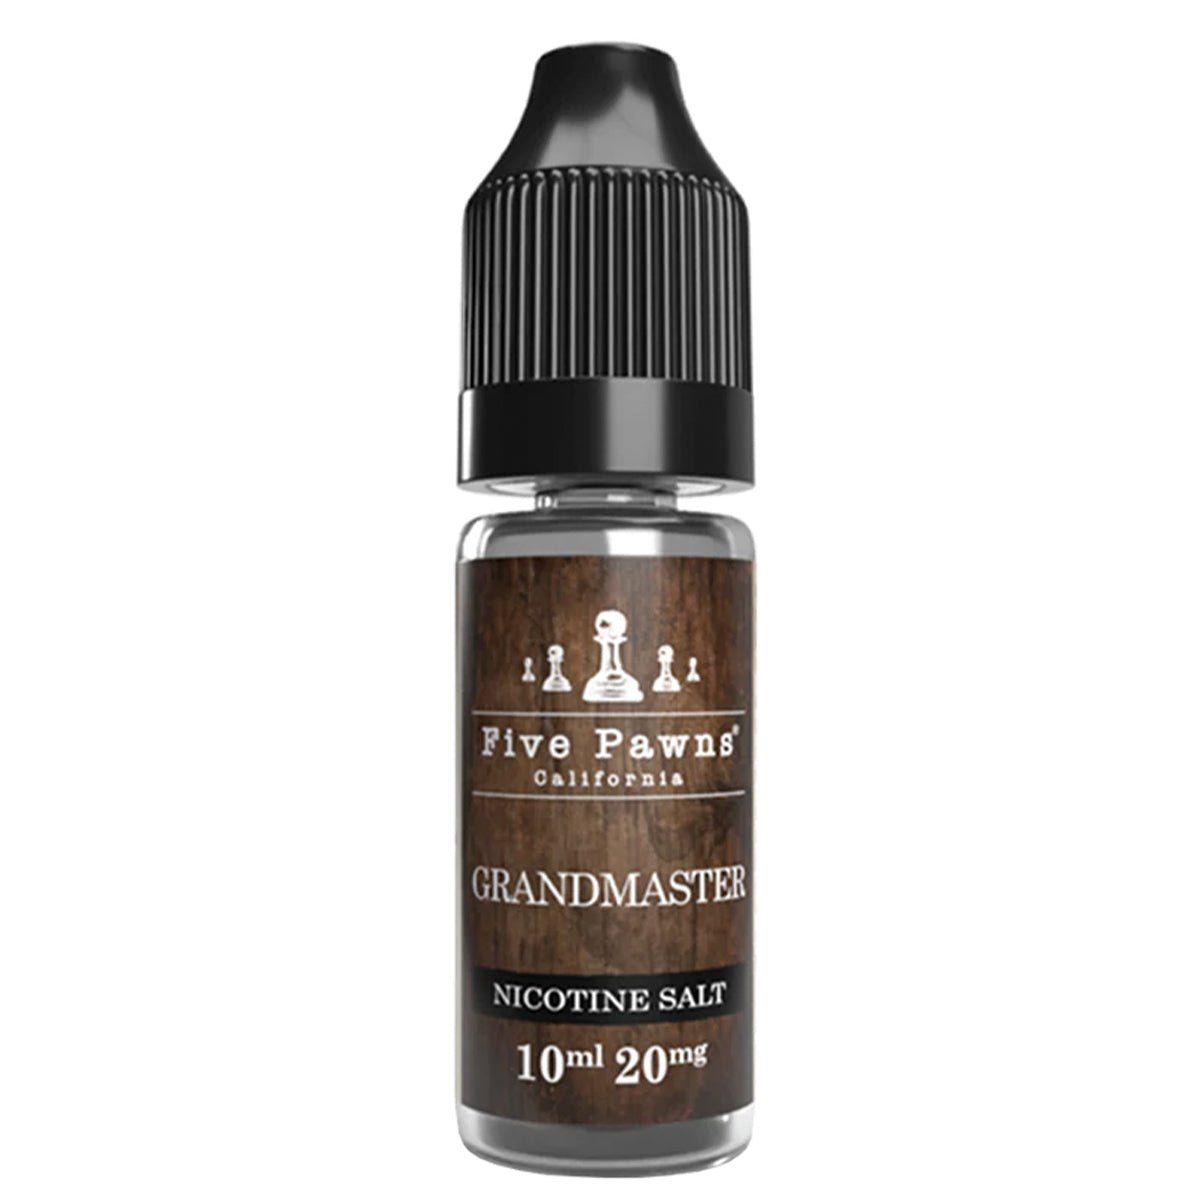 Grandmaster 10ml Nic Salt By Five Pawns - Manabush Eliquid - Tobacco E-liquid and Vape Juice